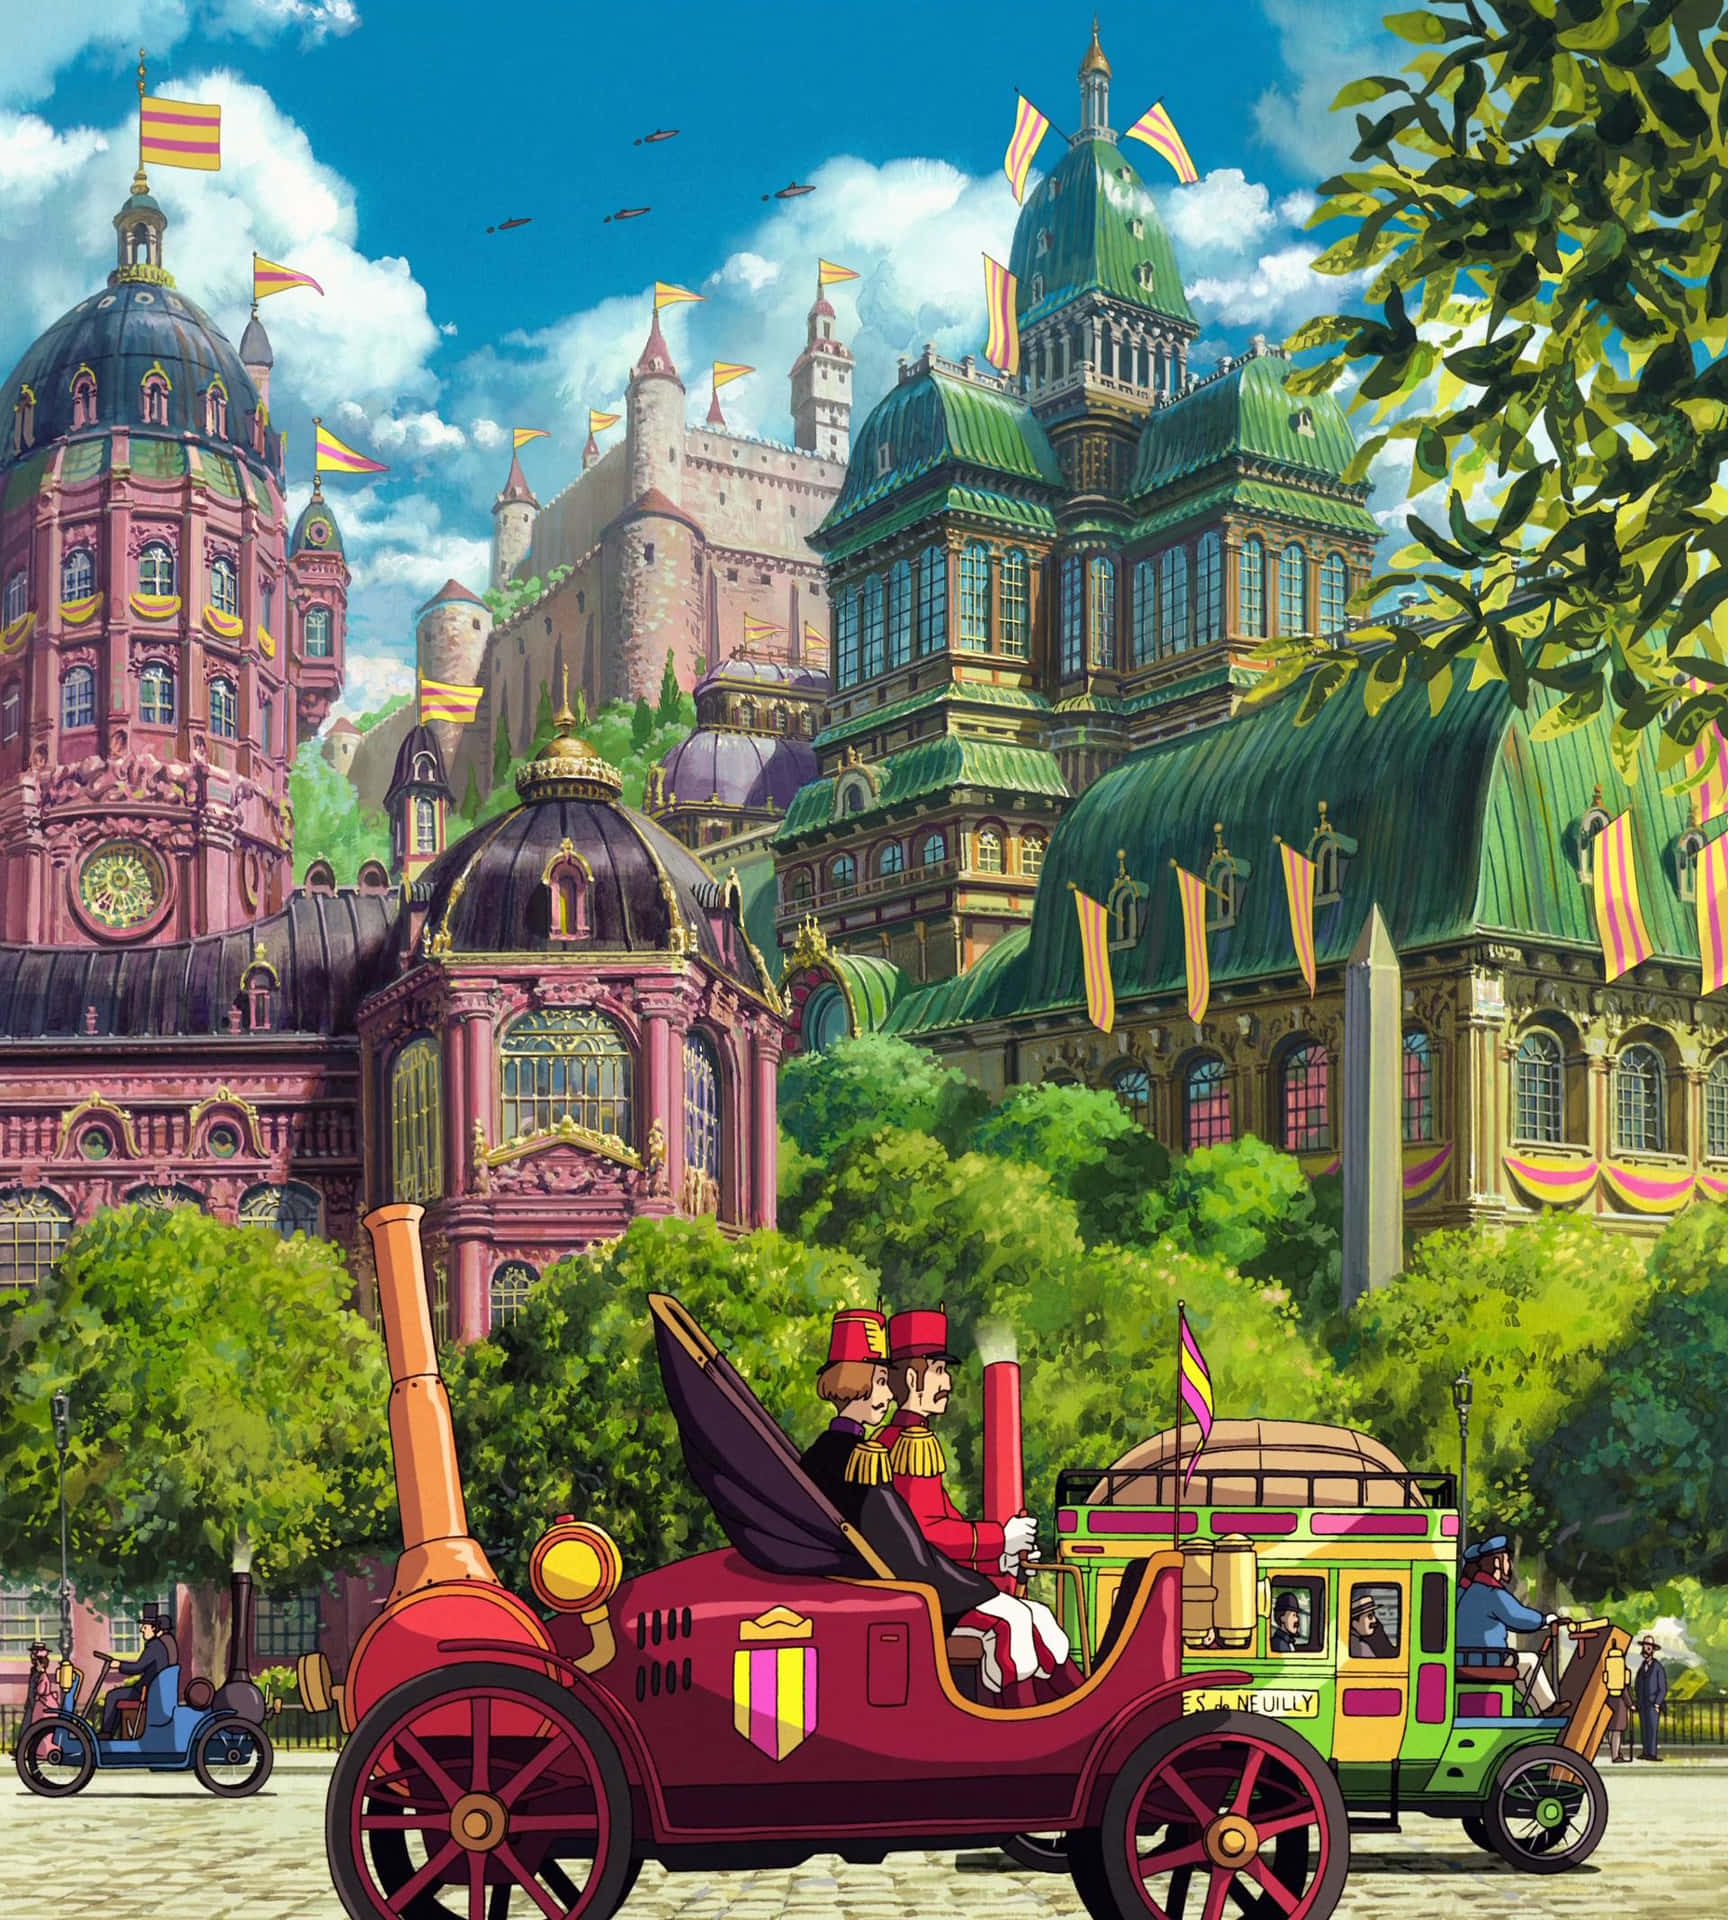 Enchanting Studio Ghibli Art from Spirited Away Wallpaper